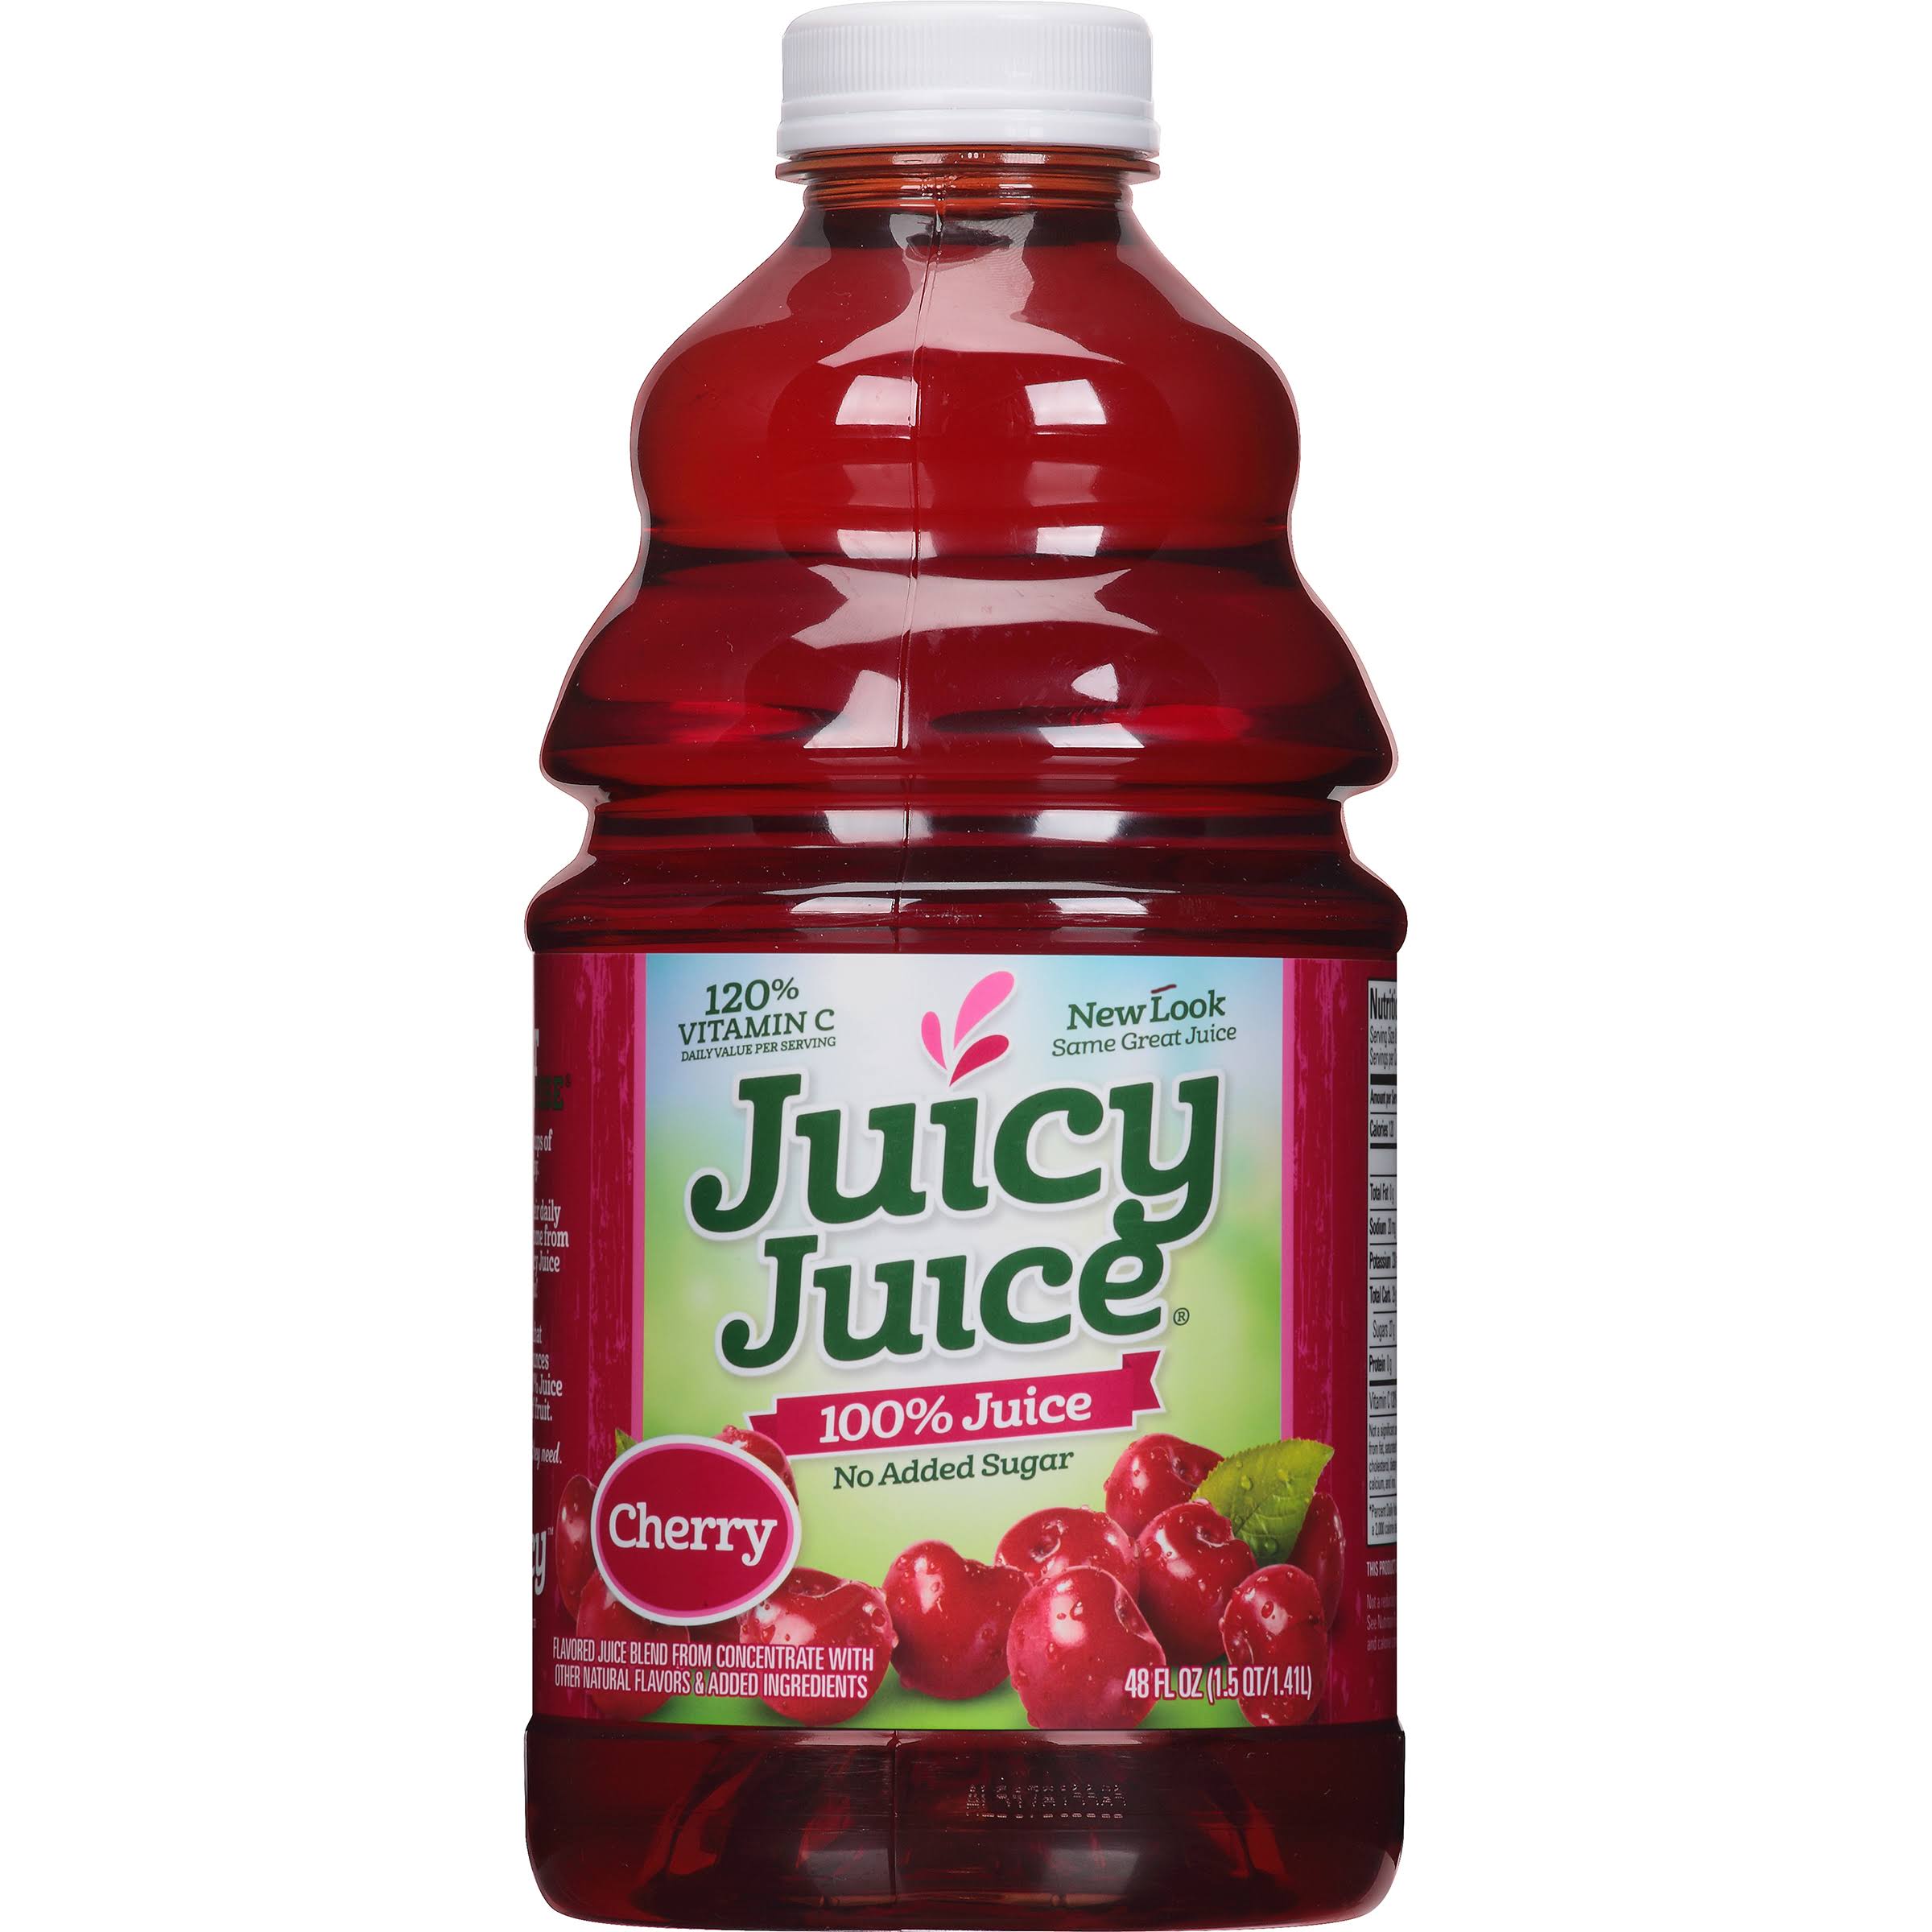 Juicy Juice 100% Juice Cherry - 48 fl oz